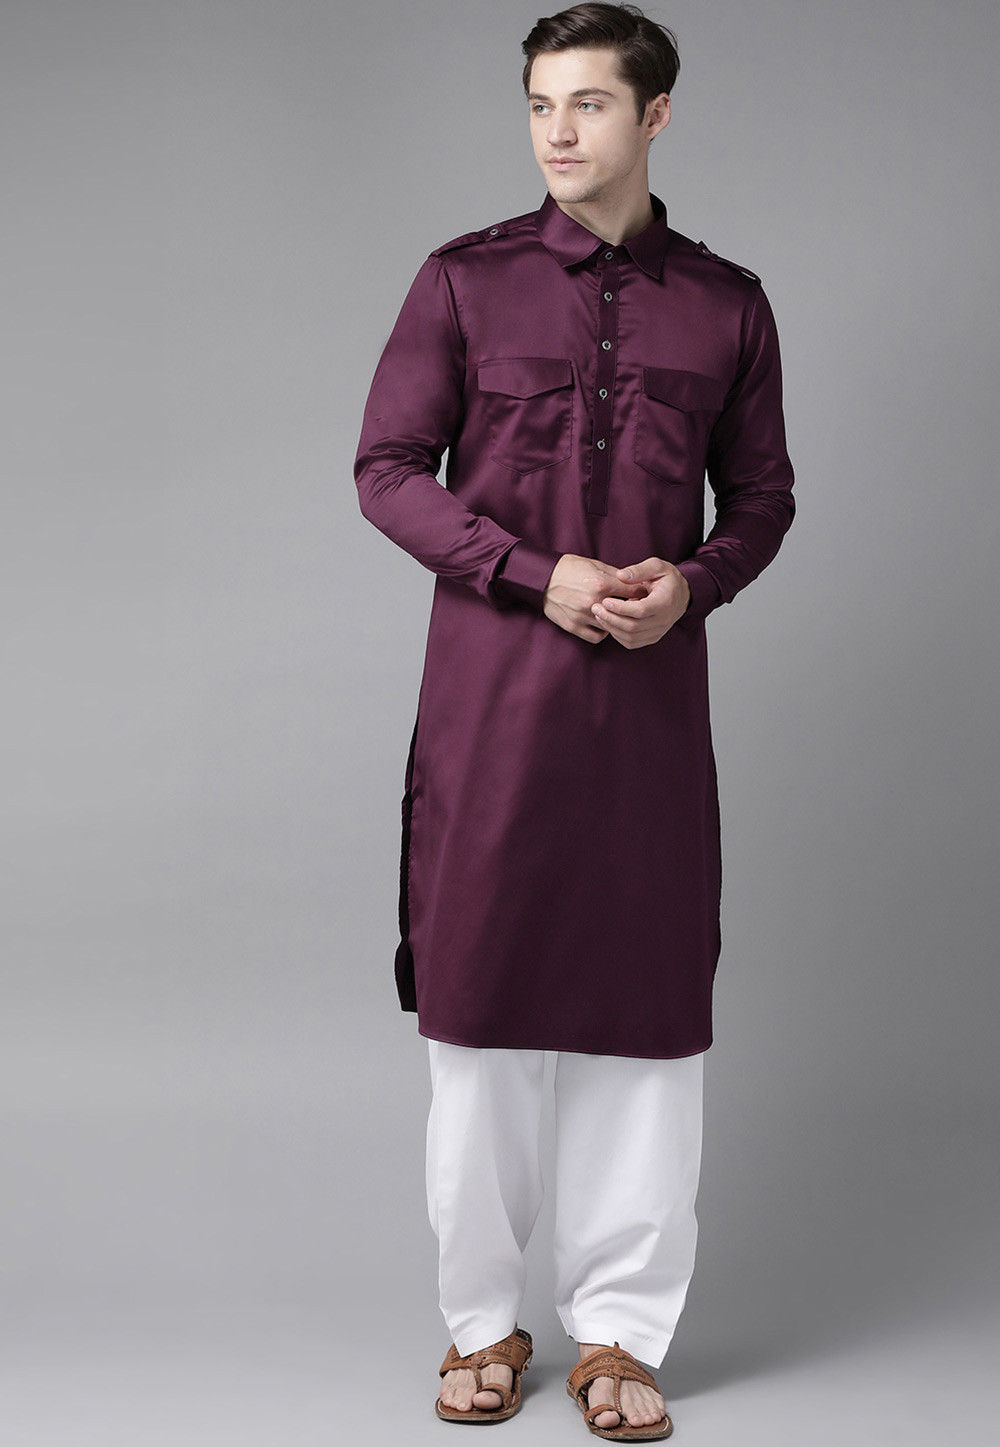 For Ramadan! Pathani Suit Brackets! | dontcallitbollywood